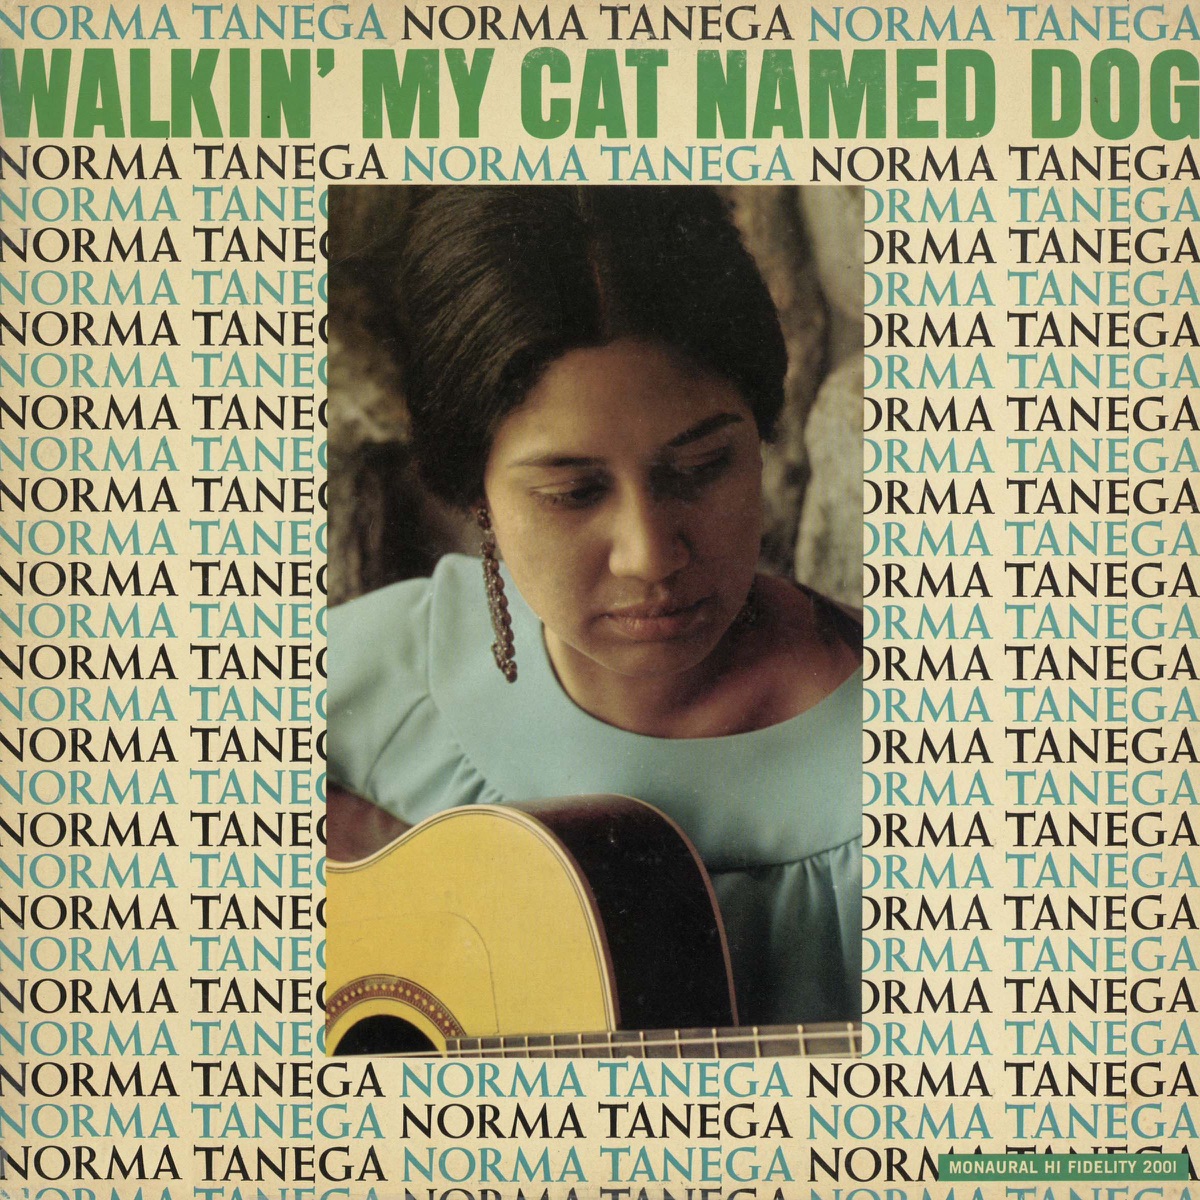 Walkin' My Cat Named Dog - Album by Norma Tanega - Apple Music